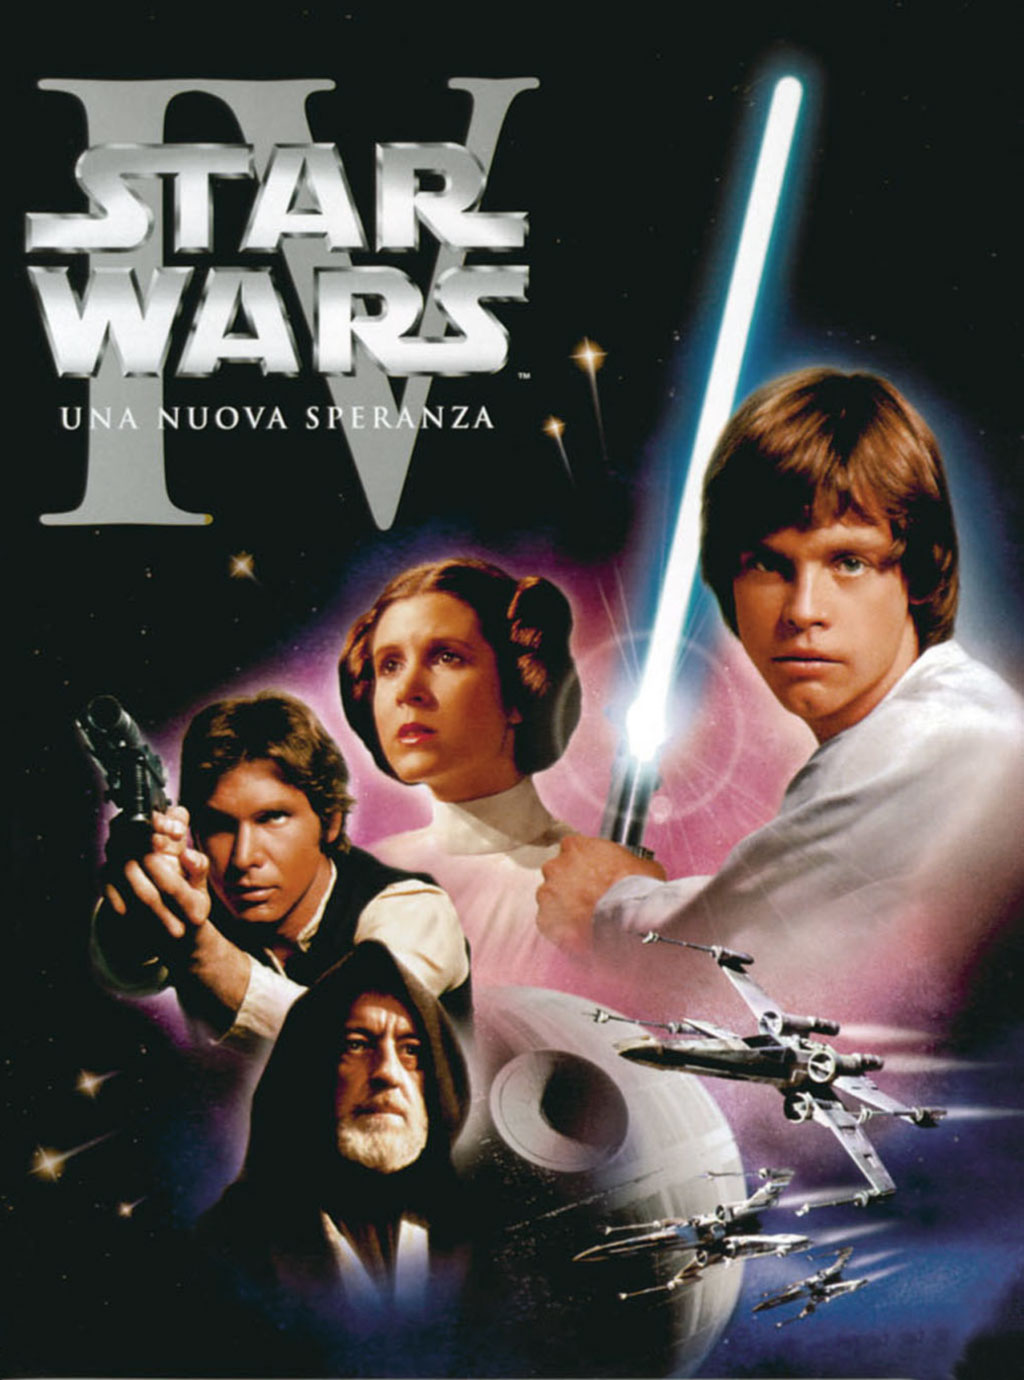 guerre-stellari-una-nuova-speranza-star-wars-a-new-hope